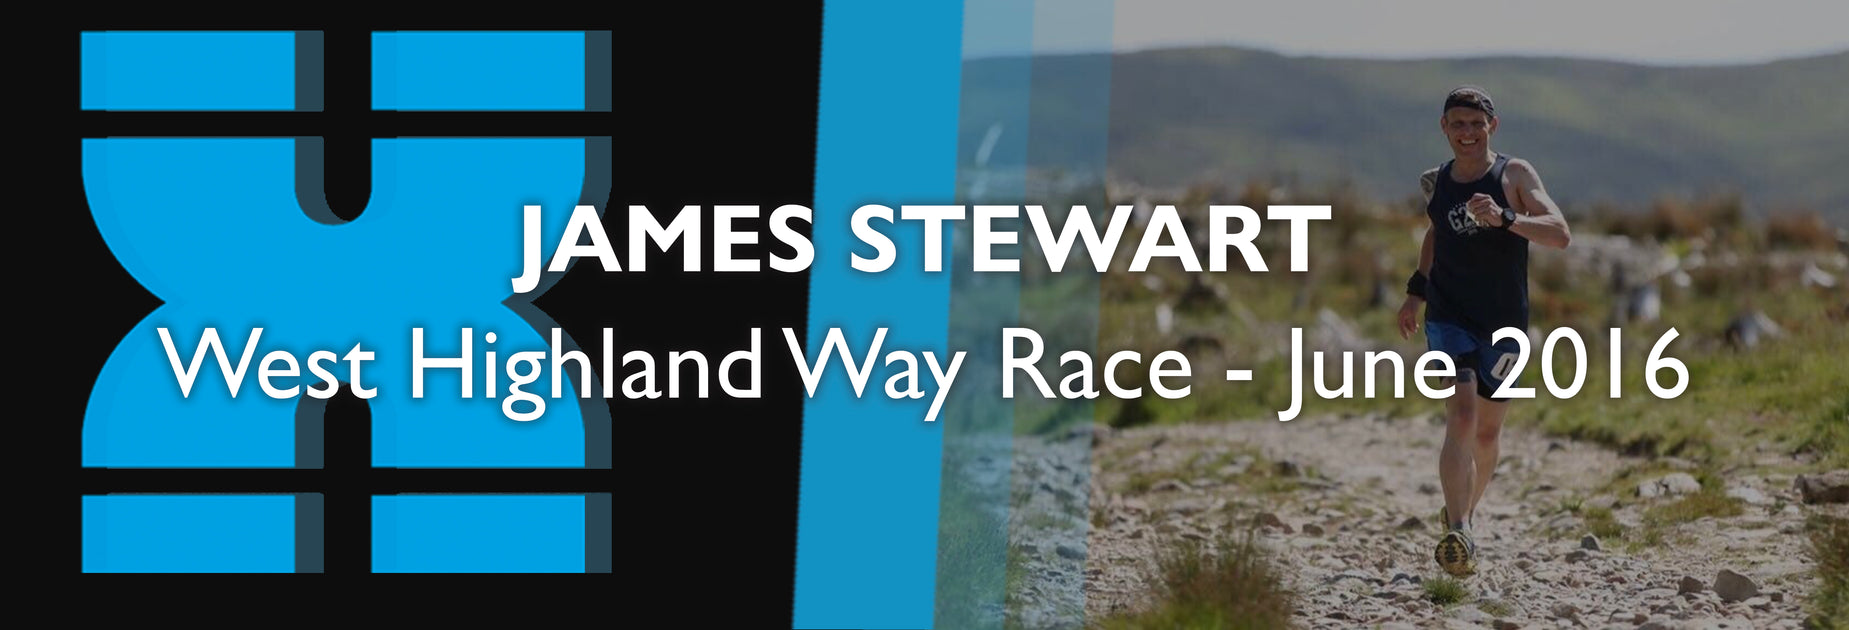 Race Report - West Highland Way Race - June 2016 - James Stewart — XMiles